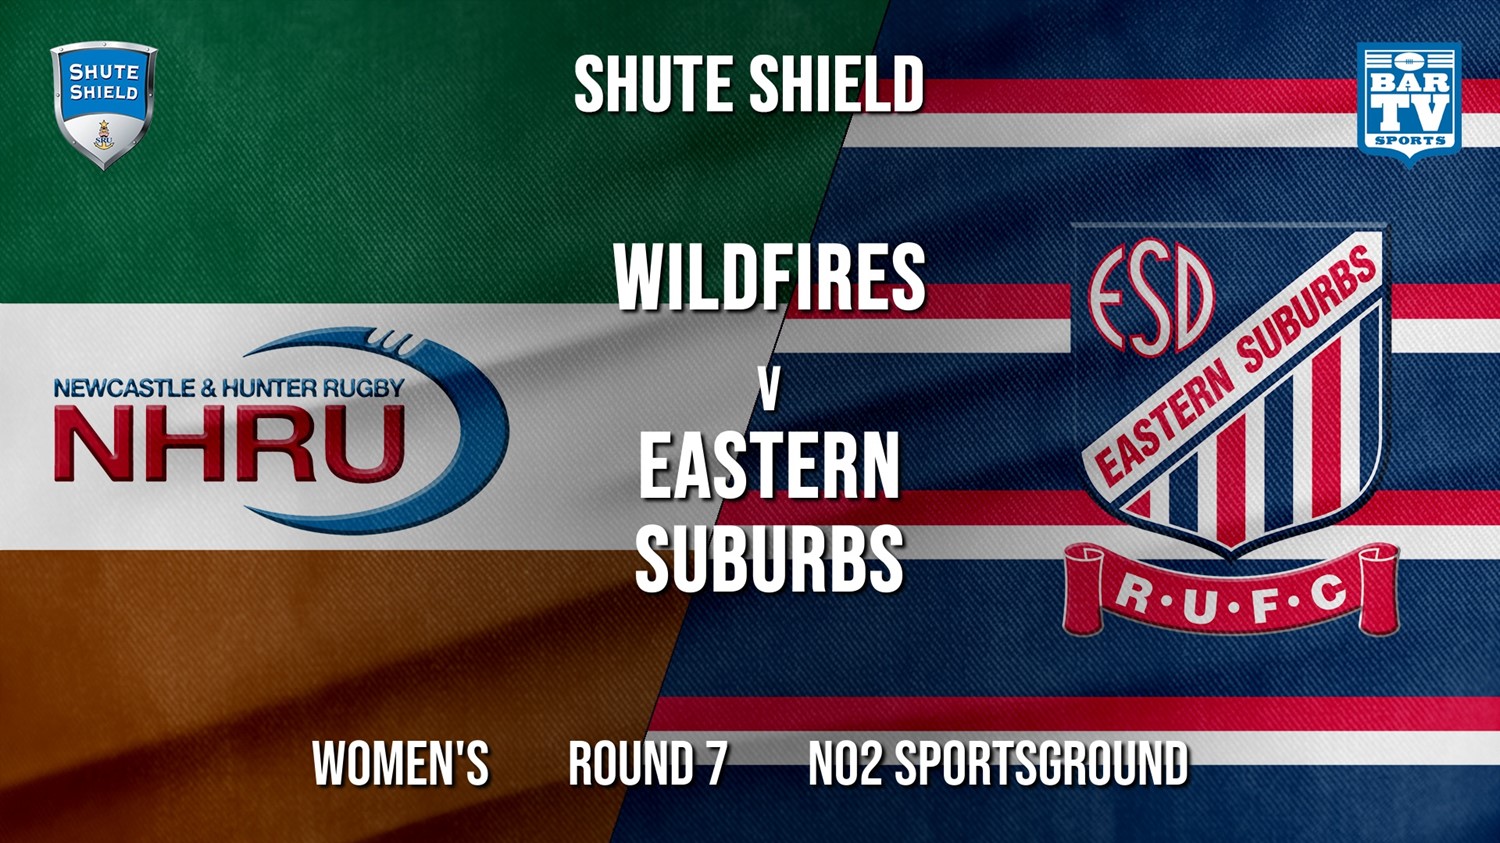 Shute Shield Round 7 - Women's - NHRU Wildfires v Eastern Suburbs Minigame Slate Image